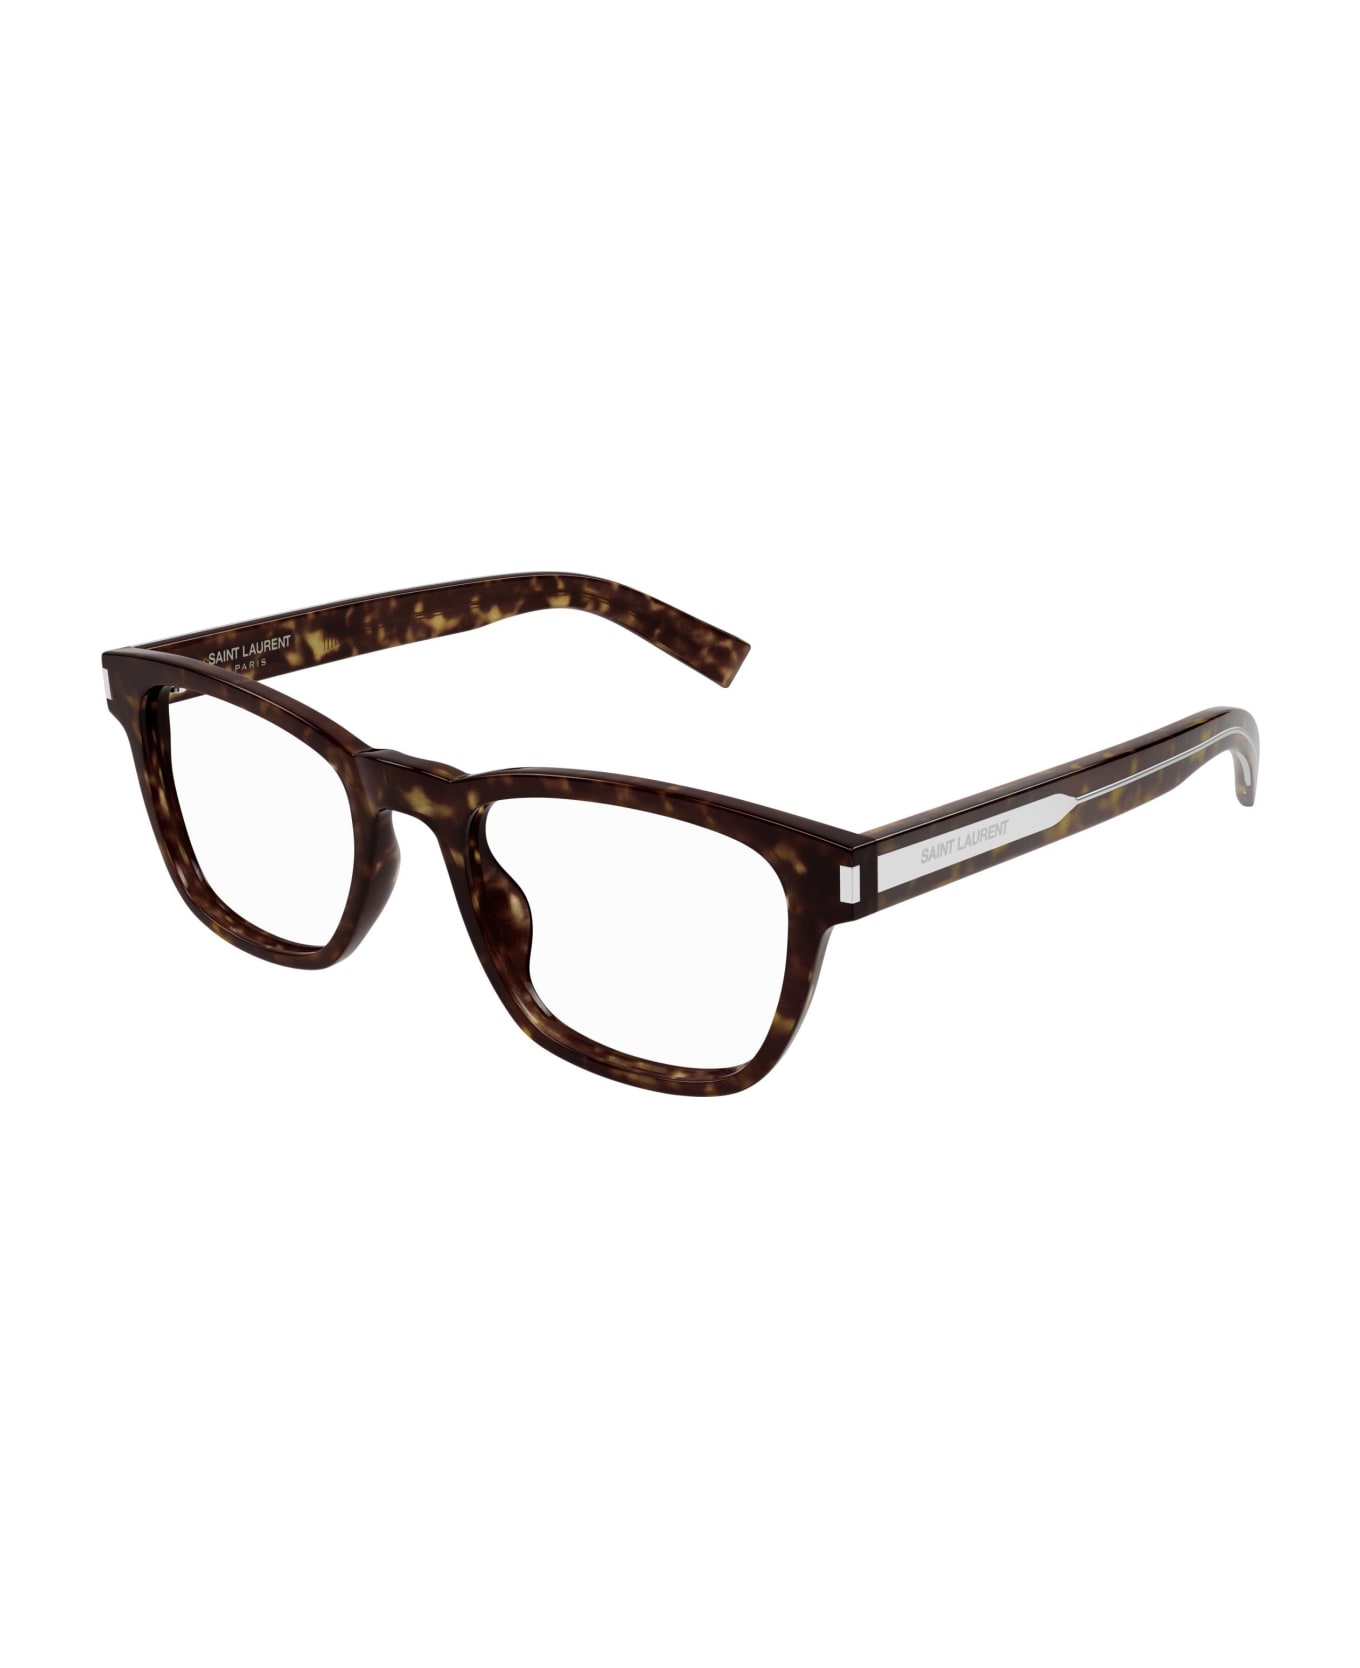 Saint Laurent Eyewear Glasses - Marrone